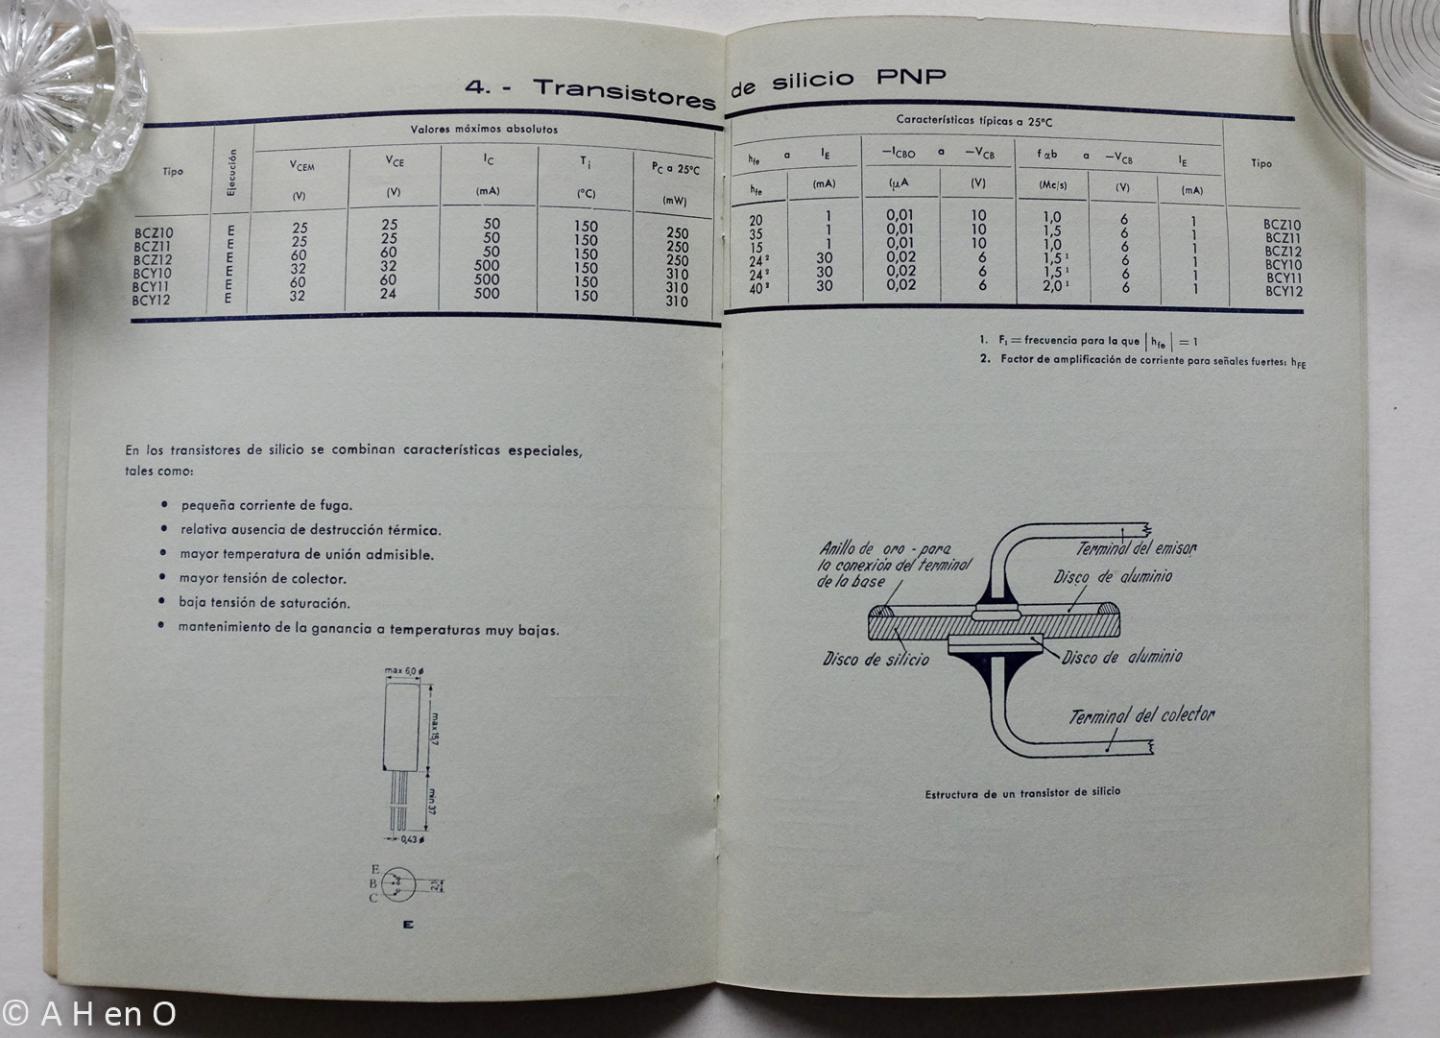 Philips Gloeilampenfabrieken Nederland n.v., Eindhoven - Transistores - Manual de característica